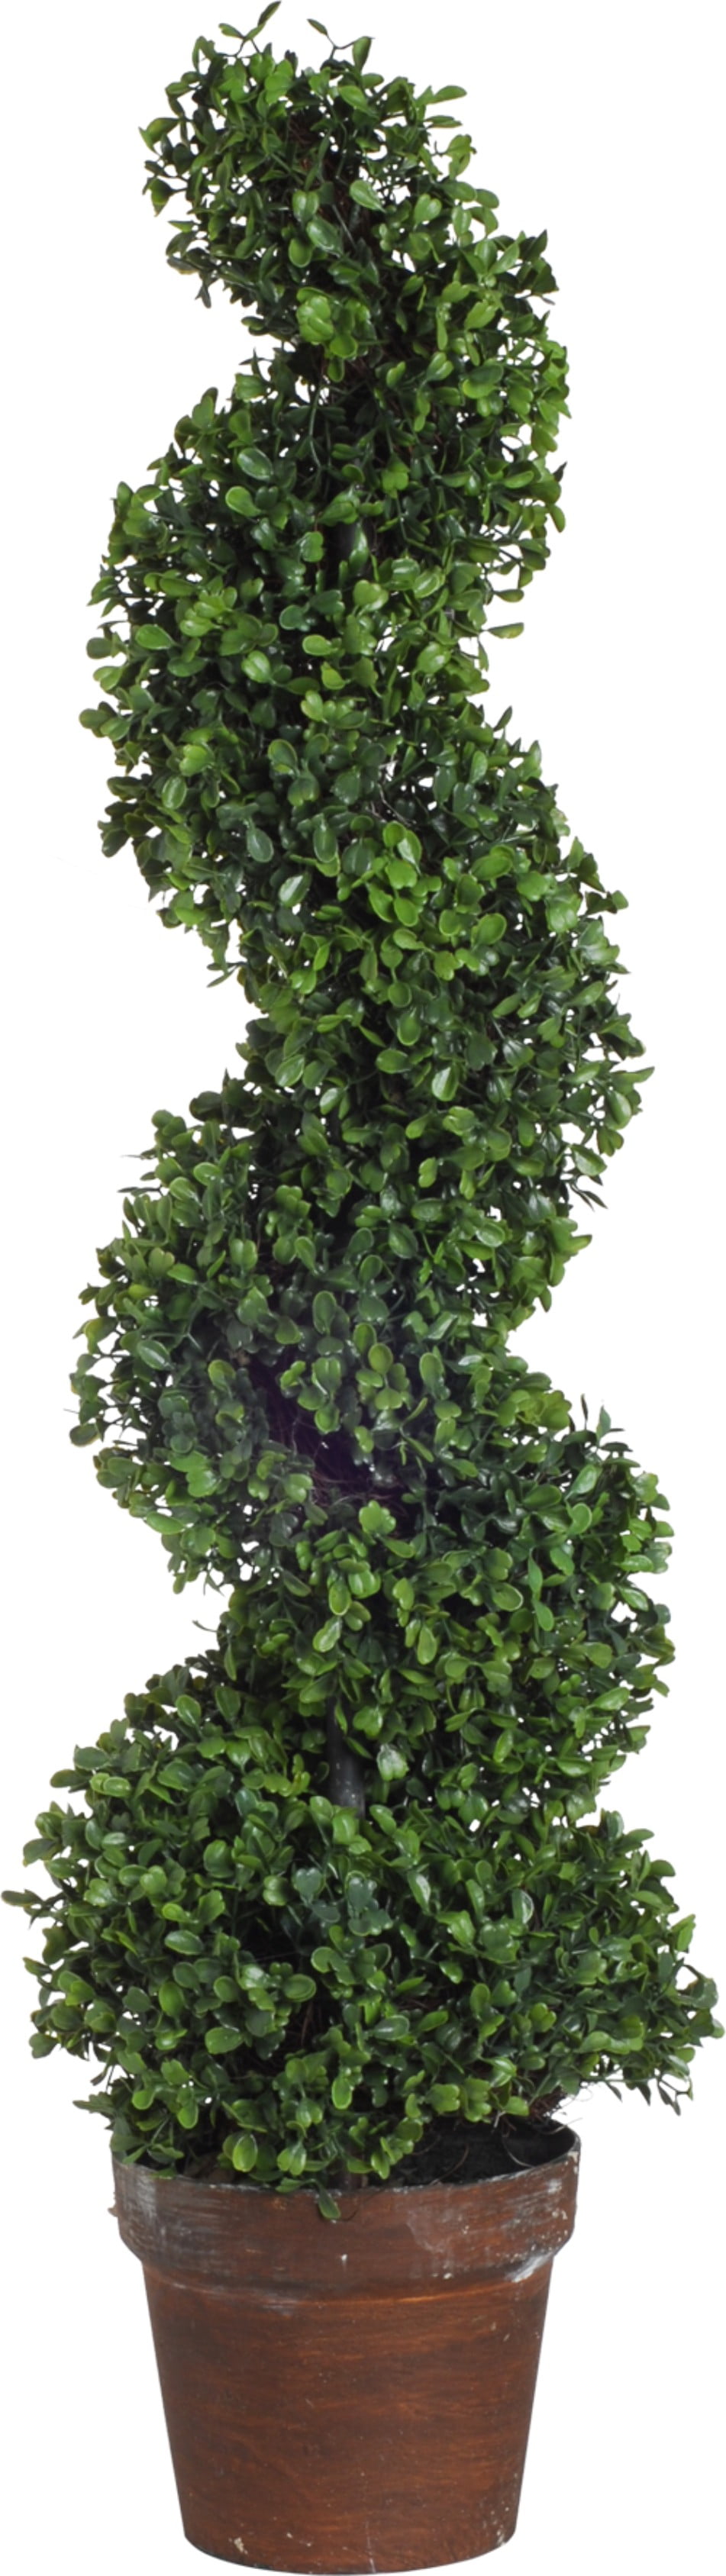 TOPIARY ARTIFICIAL OUTDOOR SPIRAL TREE 6ft 4" PLANT CYPRESS CEDAR BUSH JUNIPER 